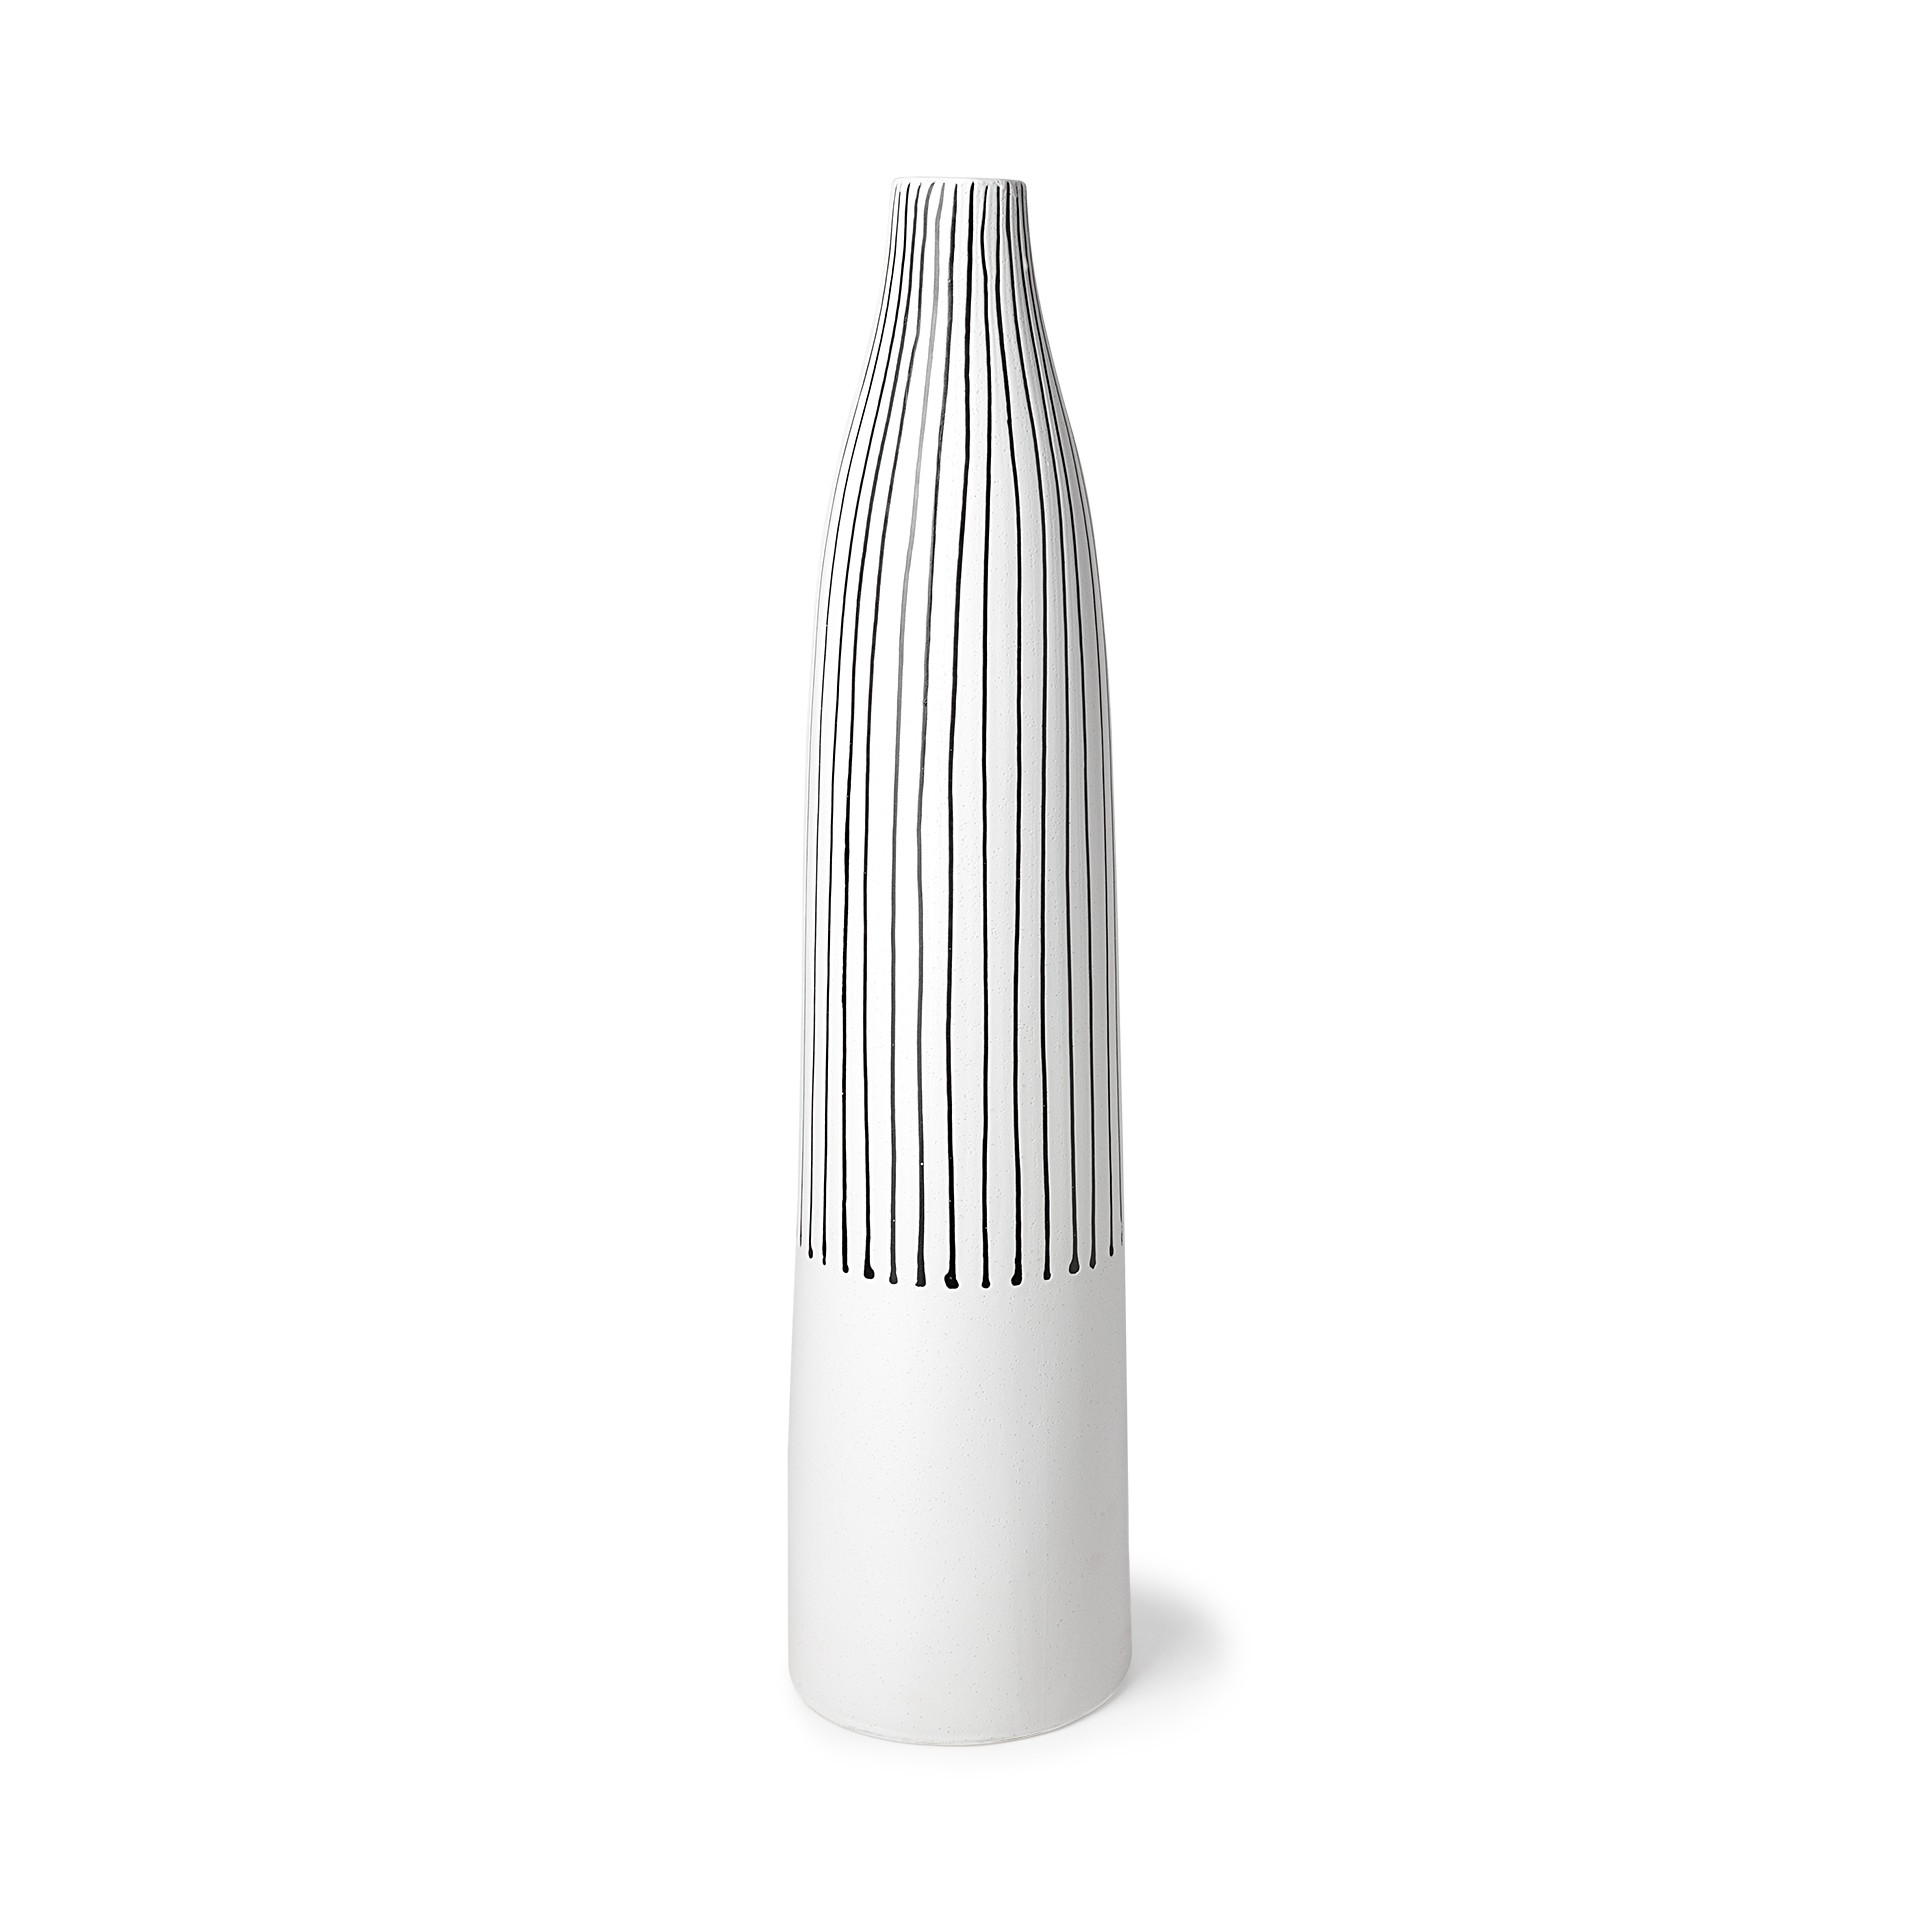 23" Black and White Pinstriope Narrow Ceramic Vase